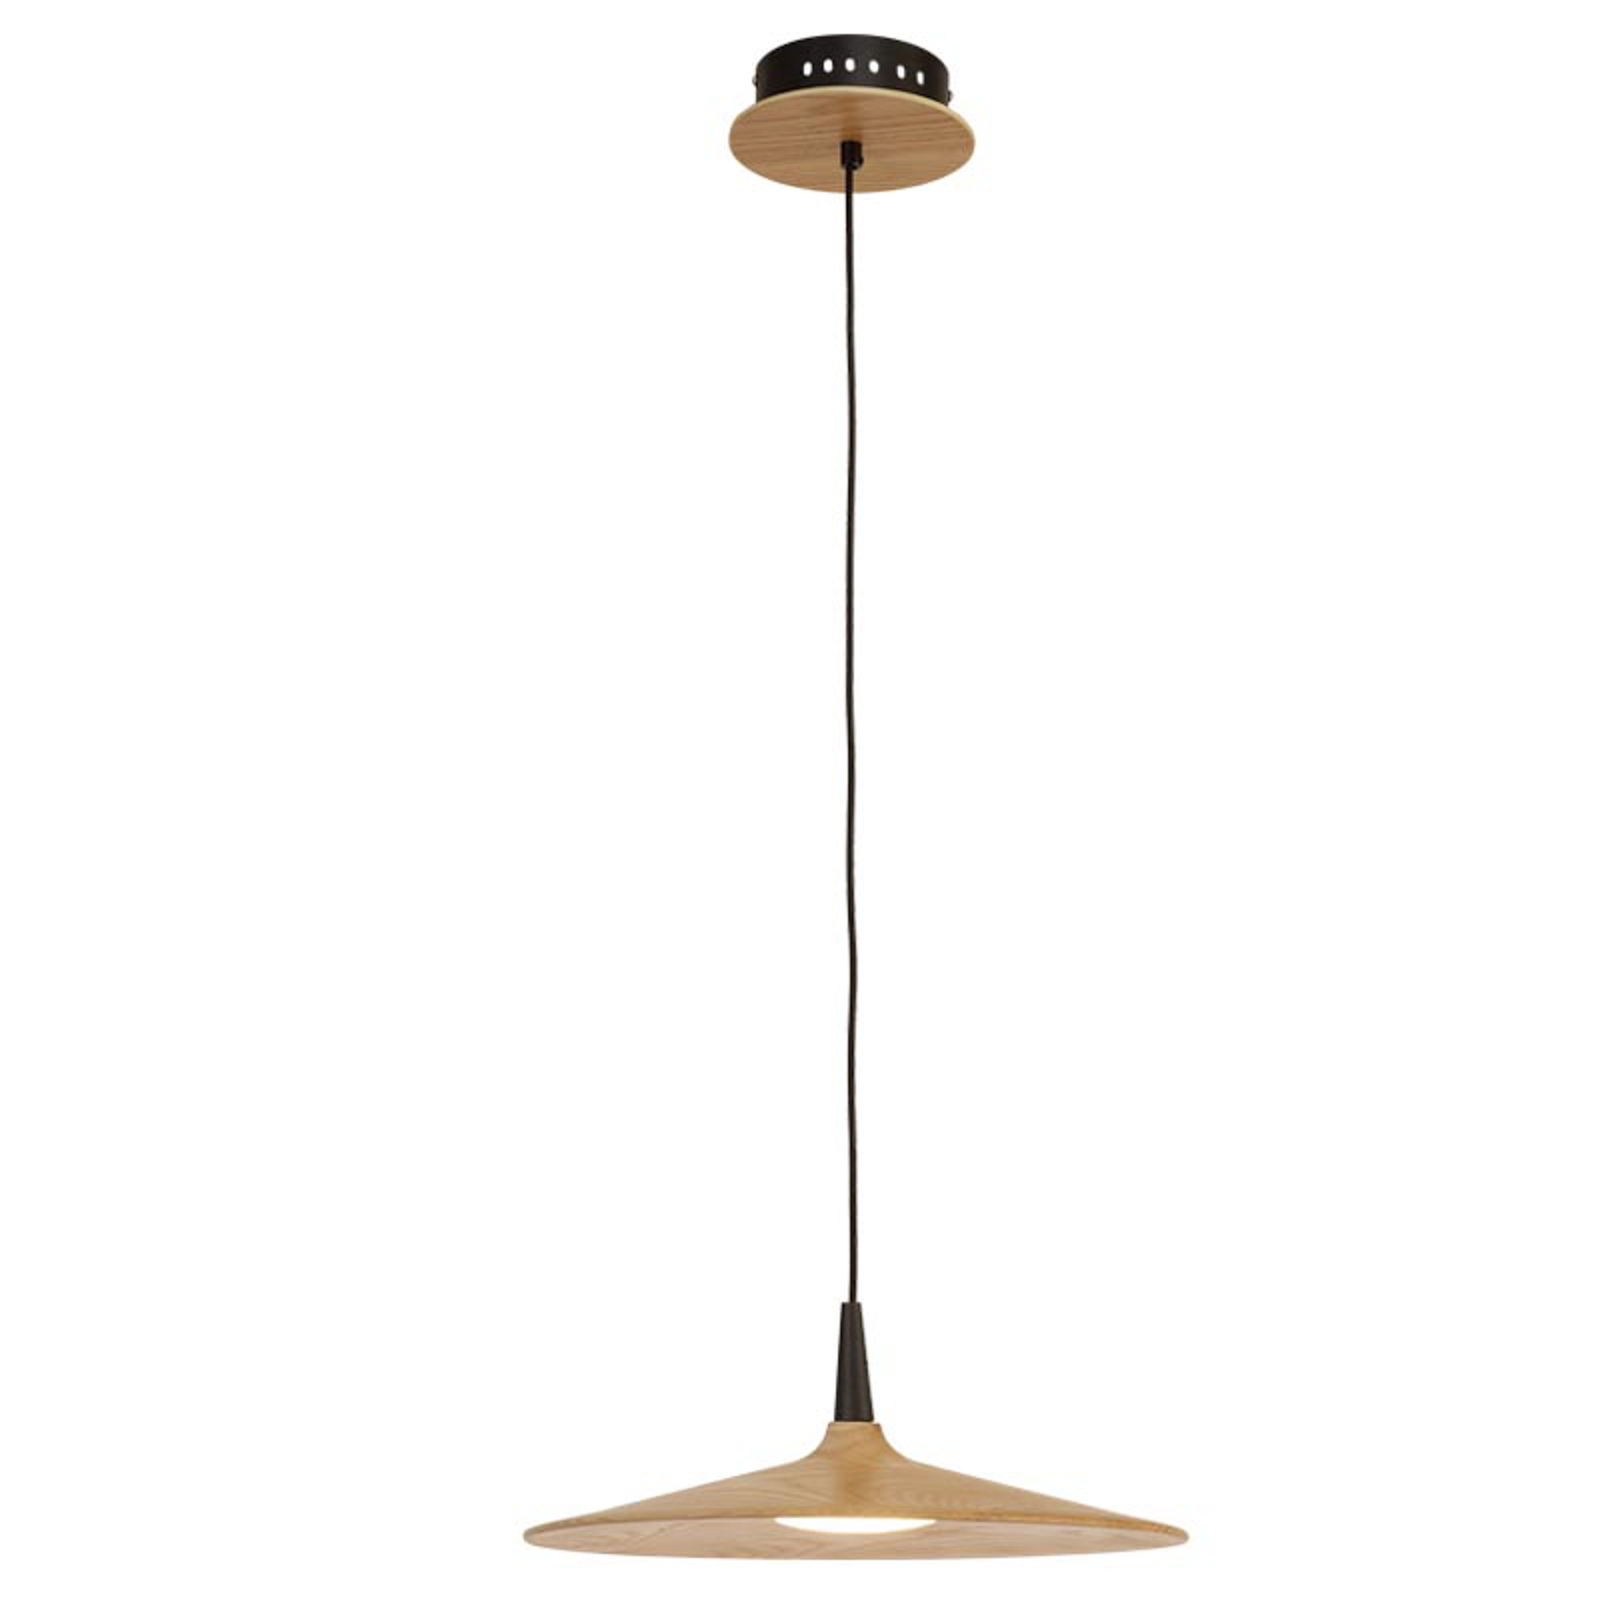 LED pendant light 19150, light wood, Ø25 cm